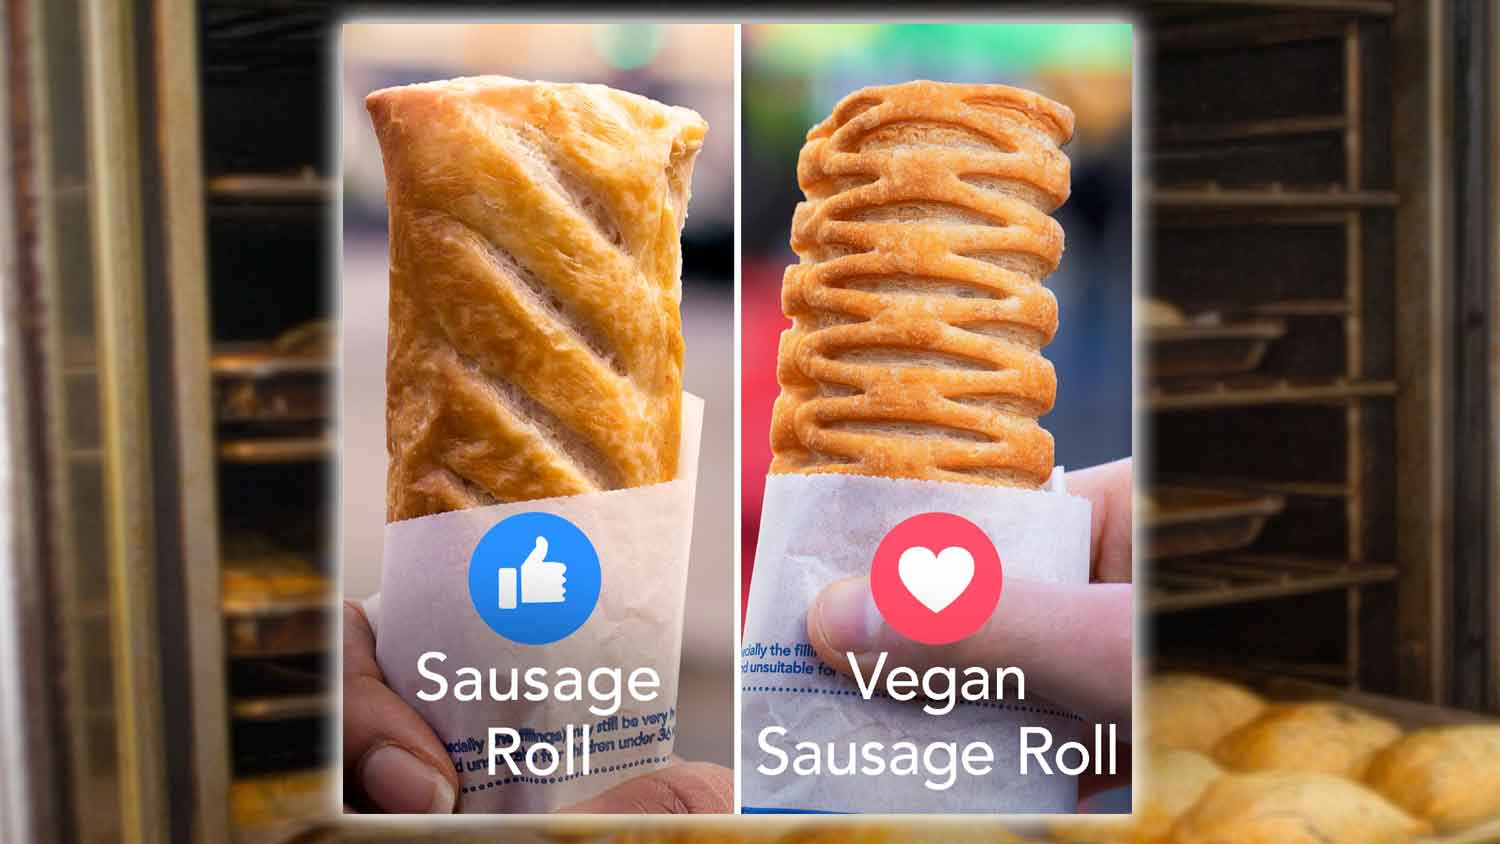 https://s41230.pcdn.co/wp-content/uploads/2019/03/vegan-plant-based-news-greggs-sausage-roll-livekindly2.jpg